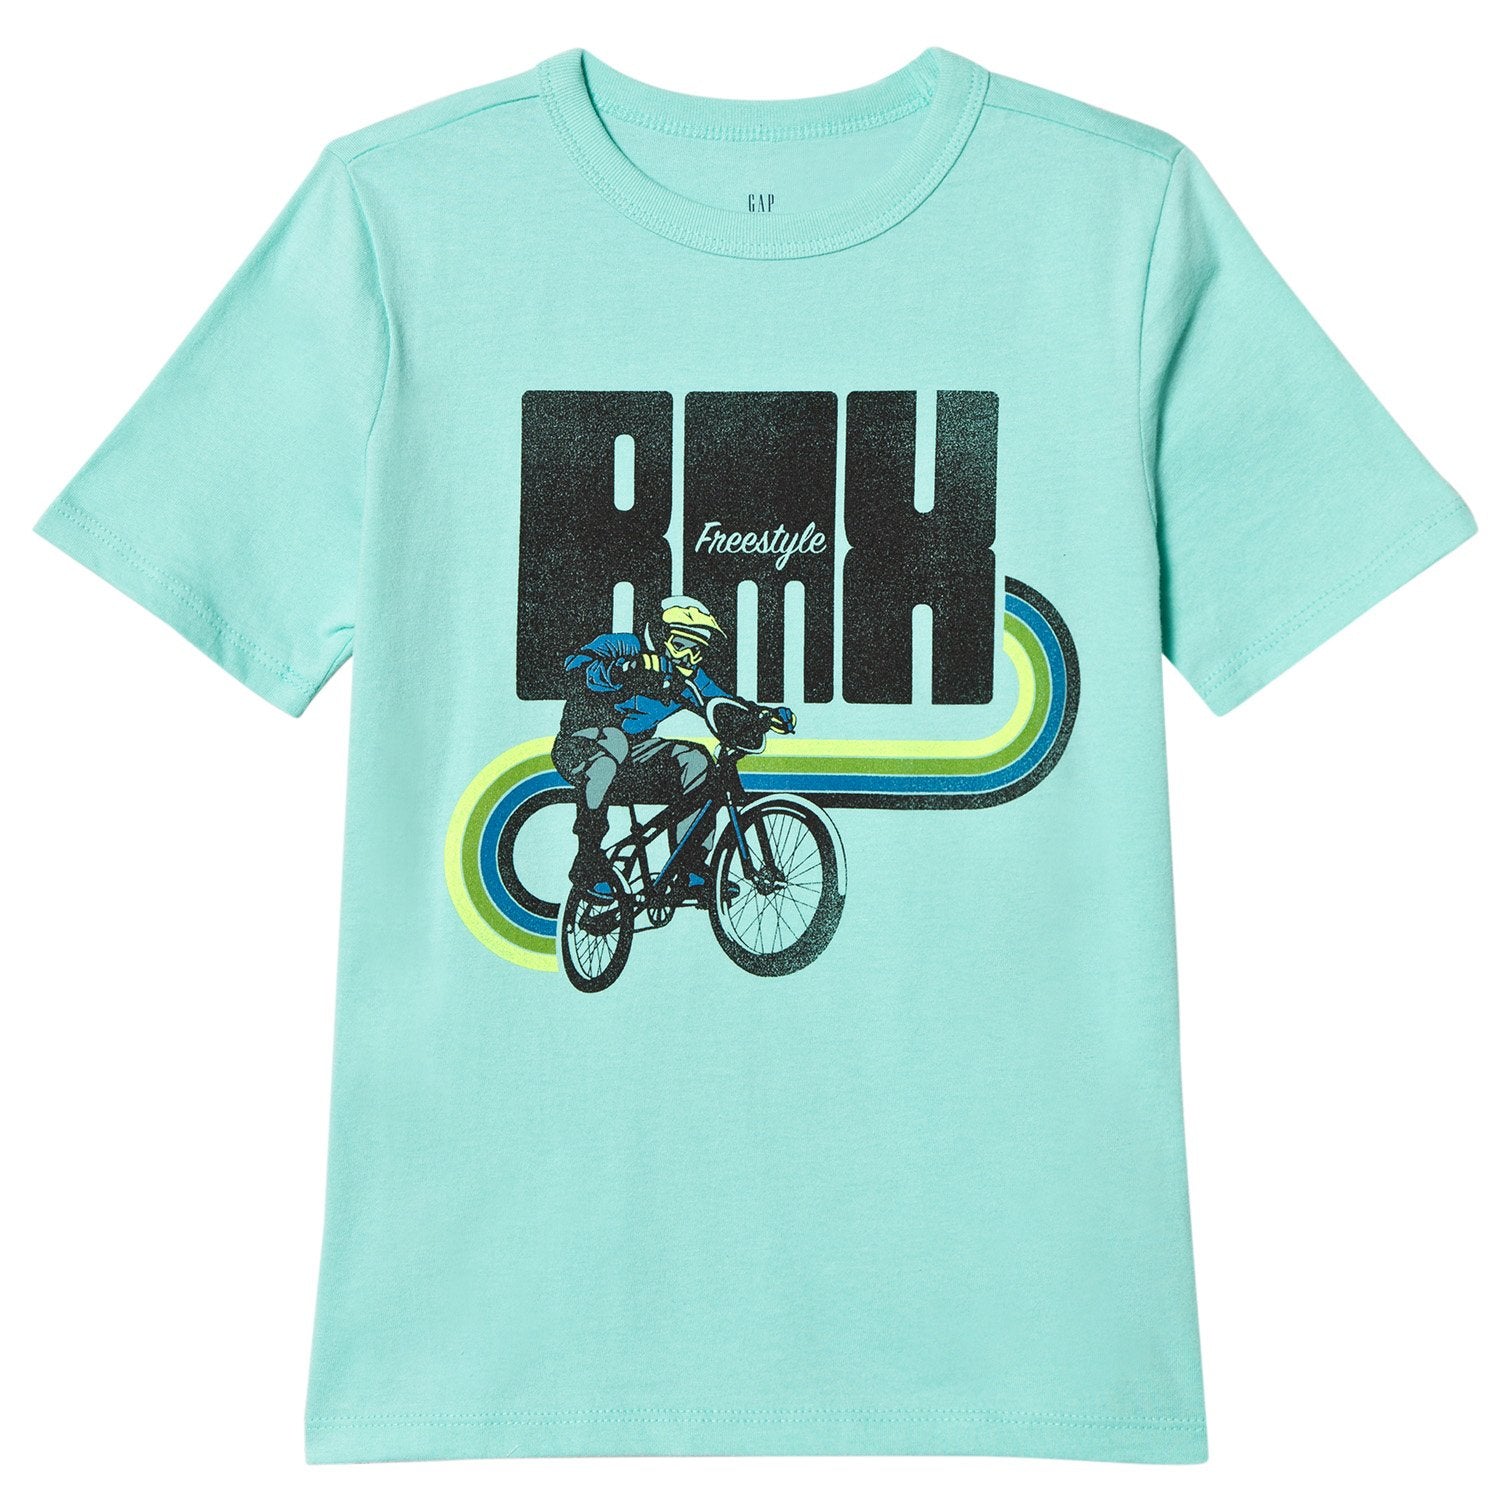 Gap Aqua BMX T-Shirt - Stockpoint Apparel Outlet